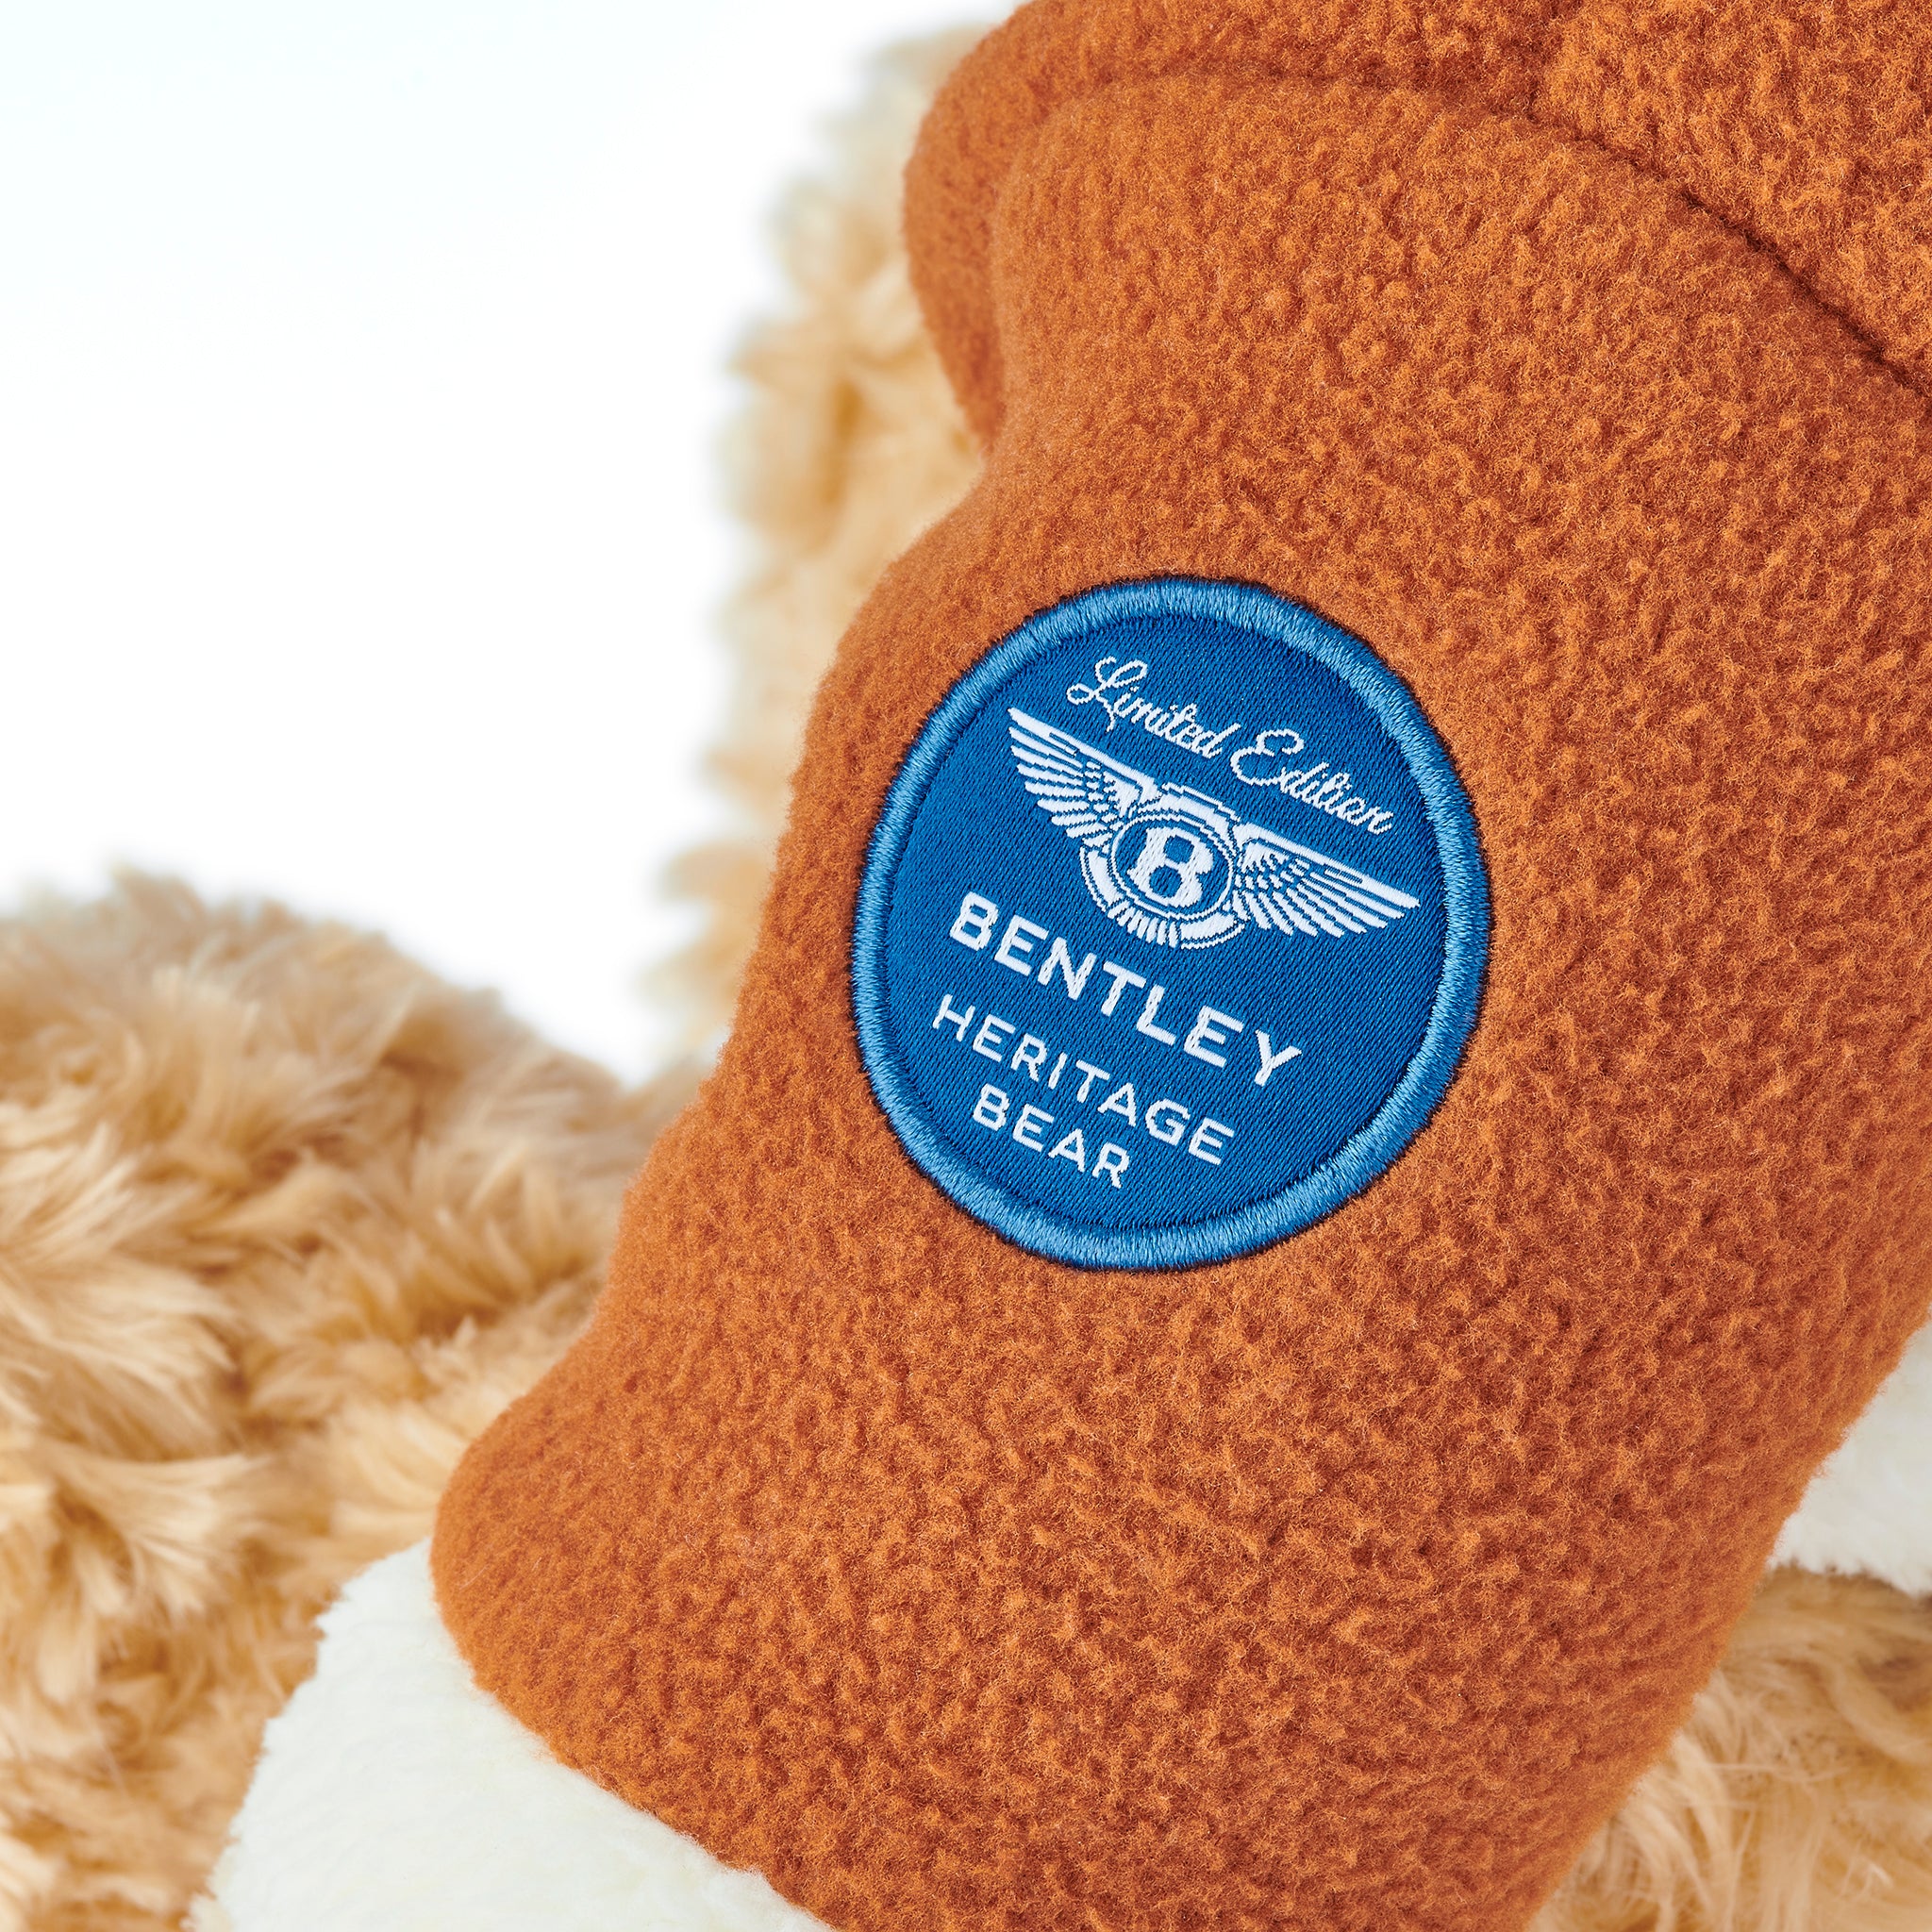 Bentley Birkin Teddy Bear — Exclusive Automotive Group Store